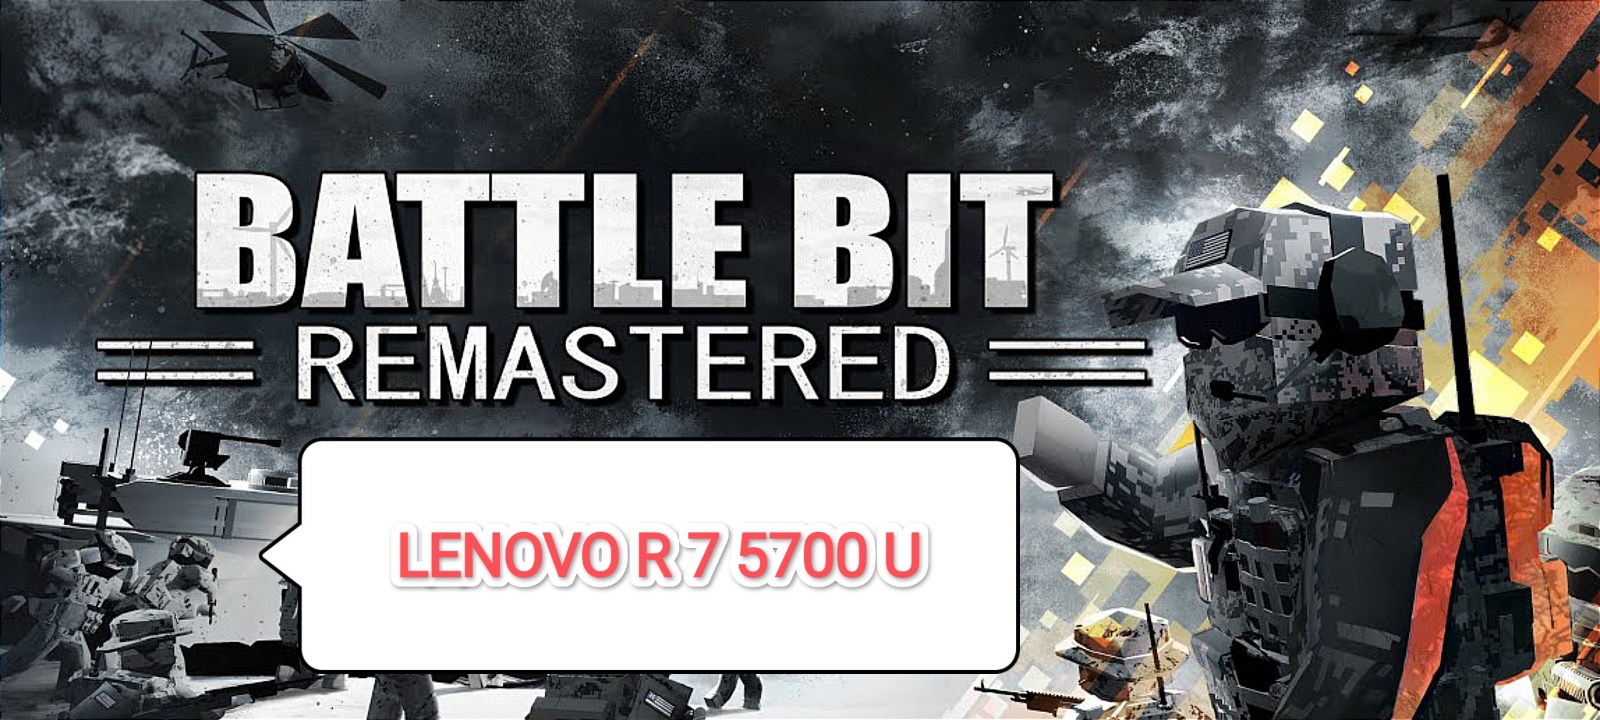 BattleBit Remastered v.1.9.3 - настройки графики для 60 фпс на слабом ПК (Lenovo R 7 5700 U)